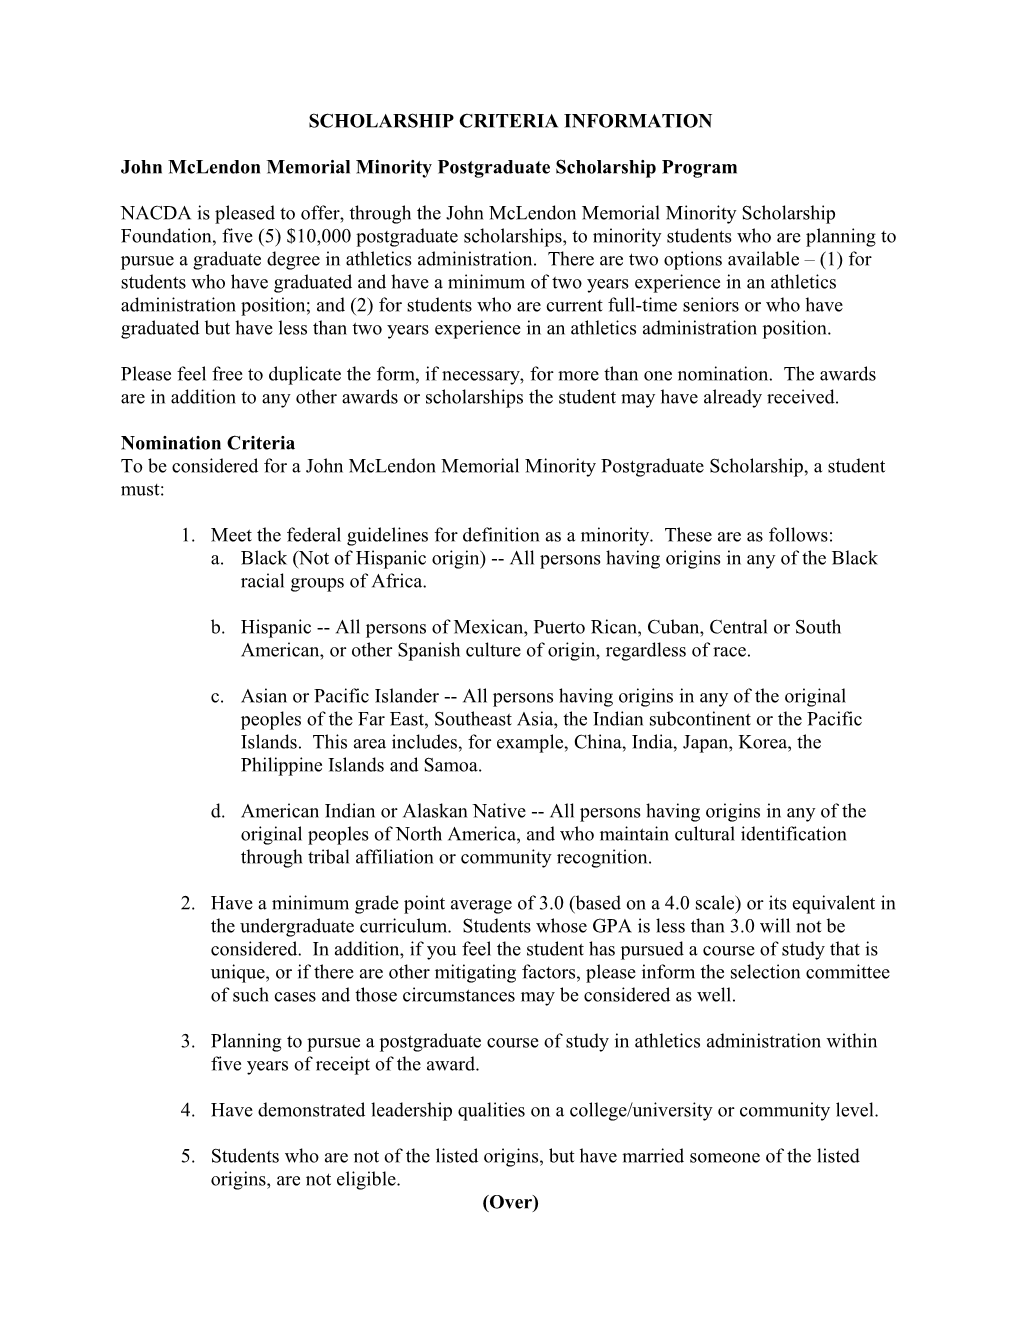 NACDA Is Pleased to Offer, Through the John Mclendon Memorial Minority Postgraduate Scholarship